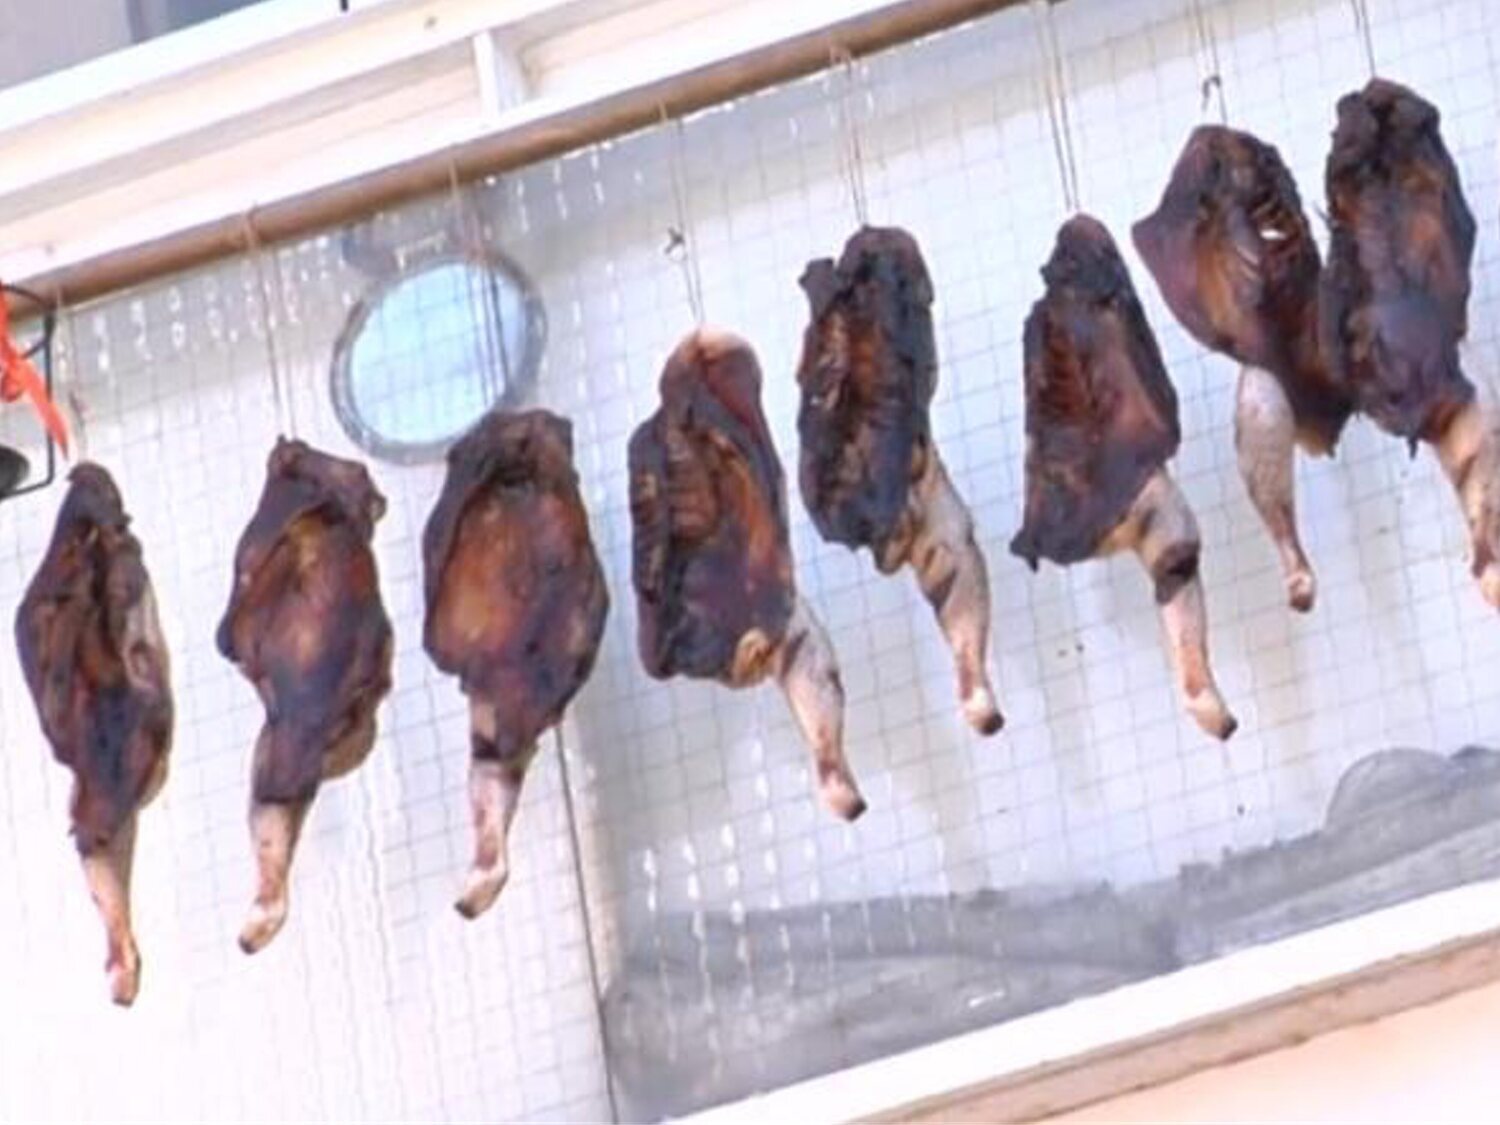 Un vecino de Madrid se dedica a tender pollos en su balcón: "Da asco"